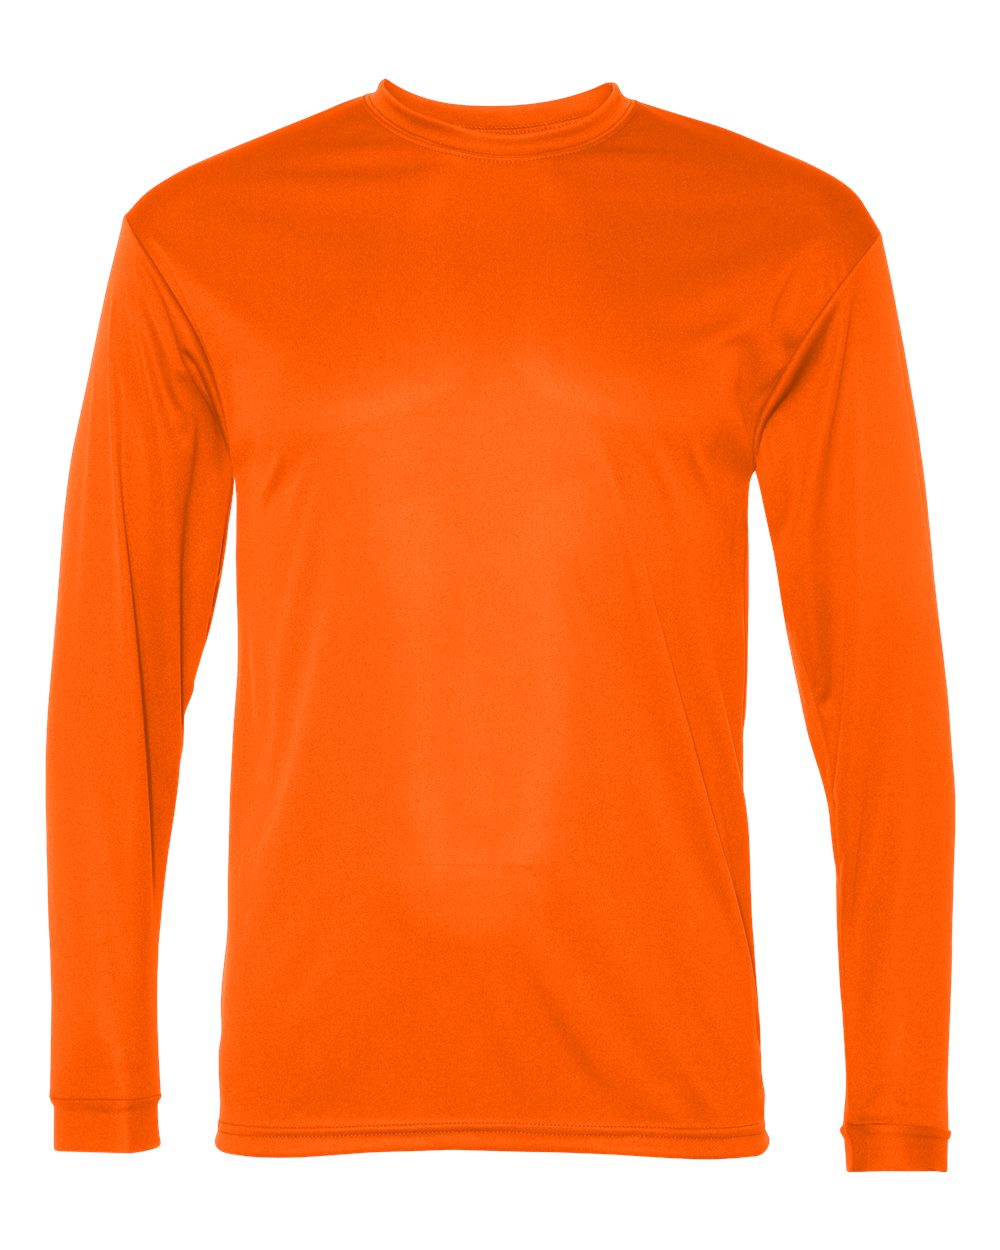 C2 Sport 5104 Performance Shirt :: Safety Orange, Size 2XL